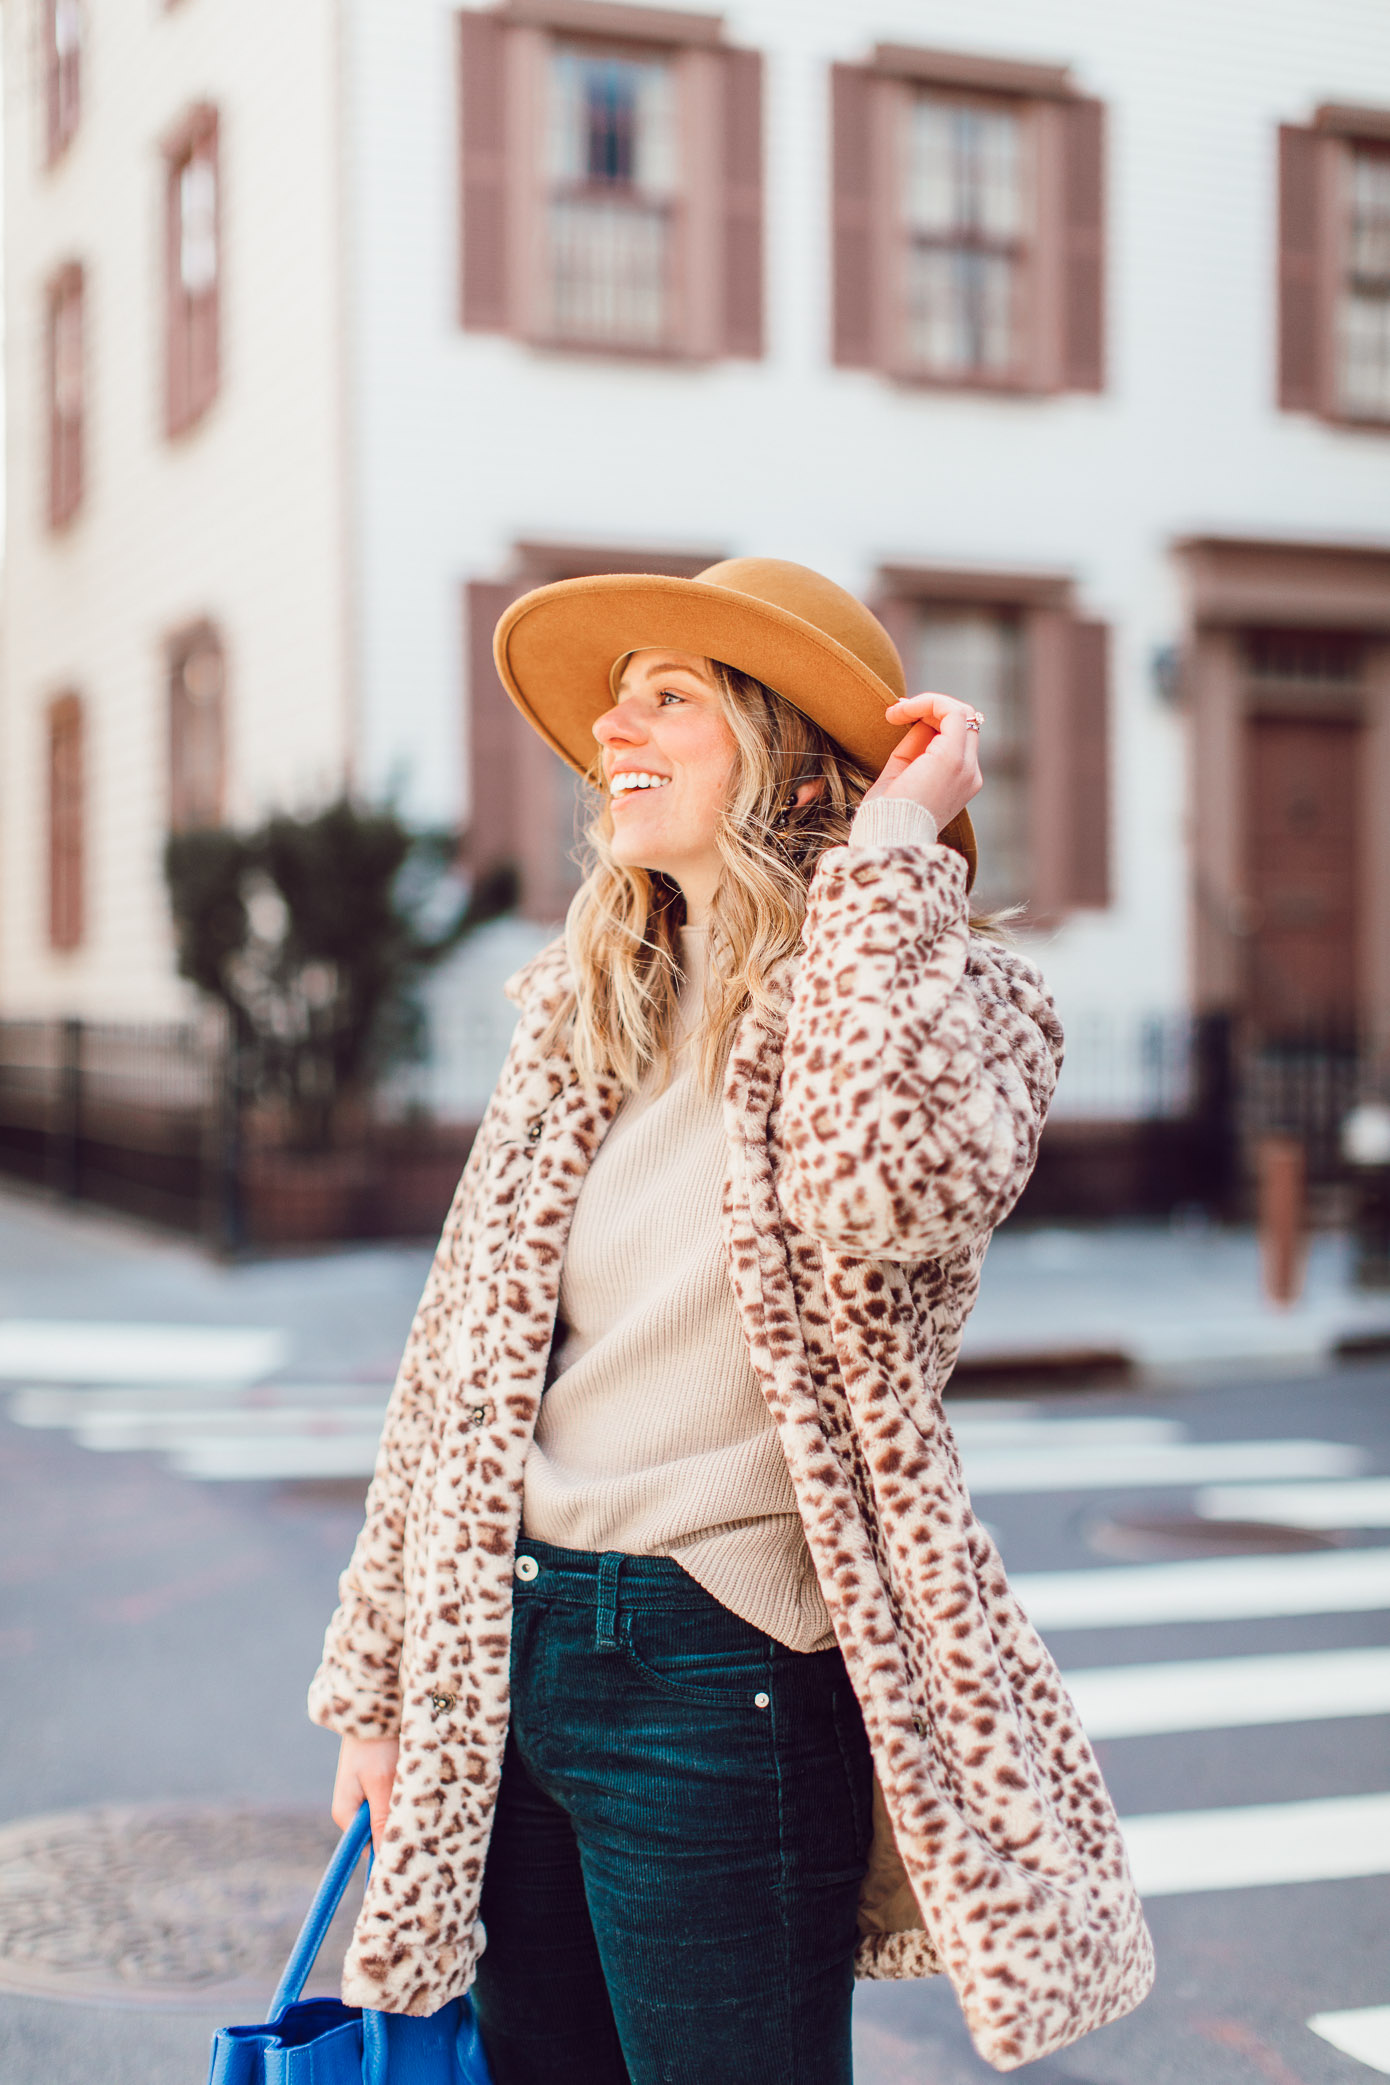 Winter Wardrobe Basics | Retro Outfit Idea - Faux Fur Leopard Coat, Corduroy Pants, Bright Blue Leather Tote, Bronze Felt Hat, White Booties featured on Louella Reese